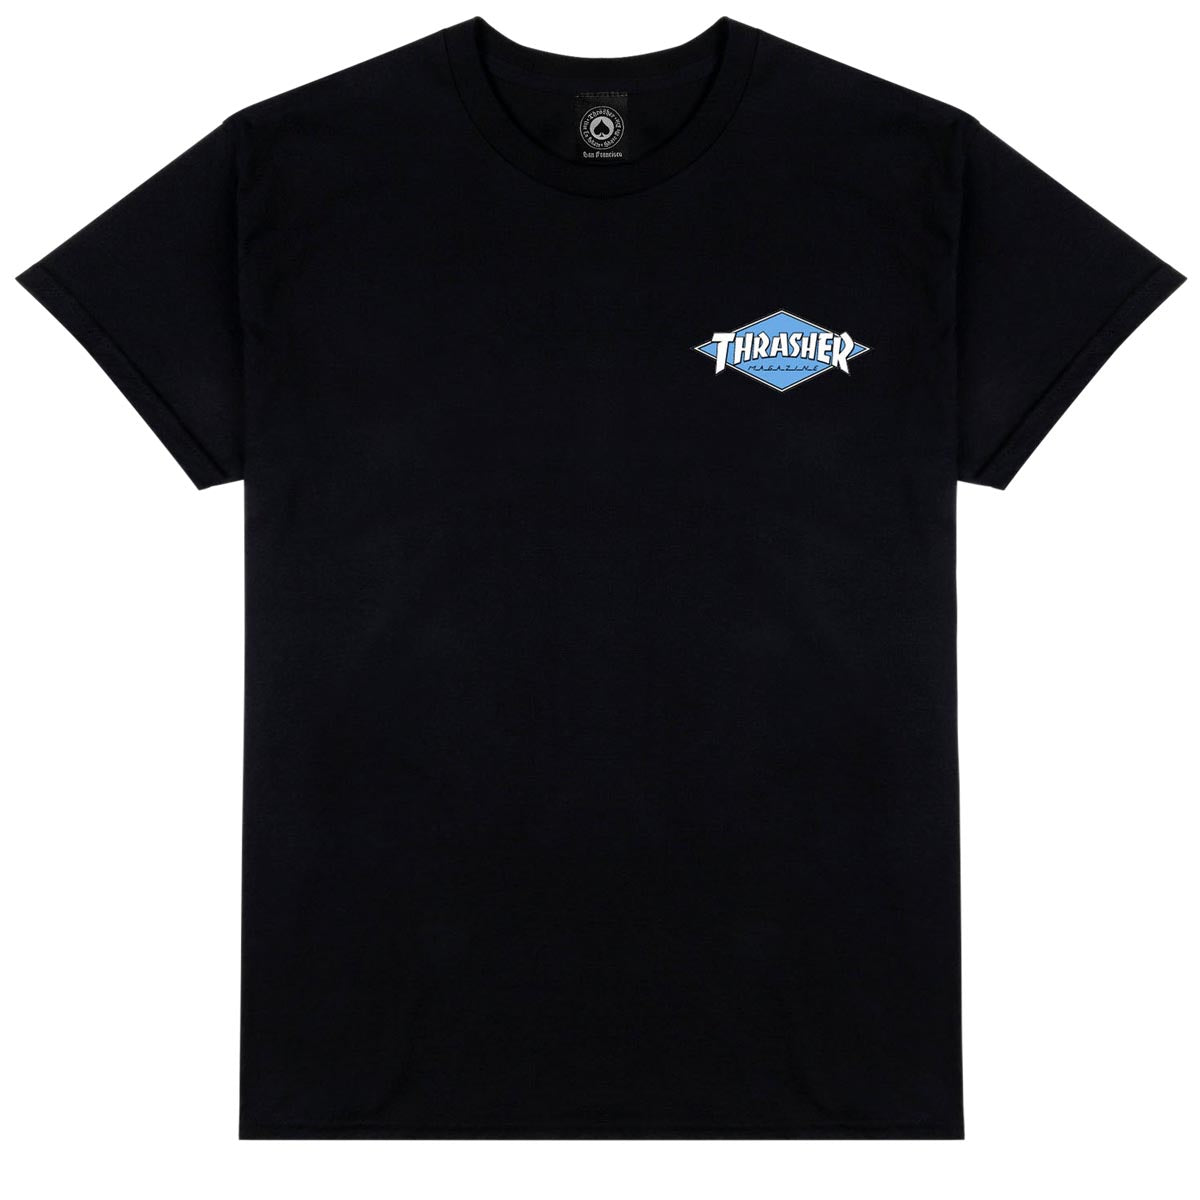 Thrasher Little Diamond T-Shirt - Black image 1